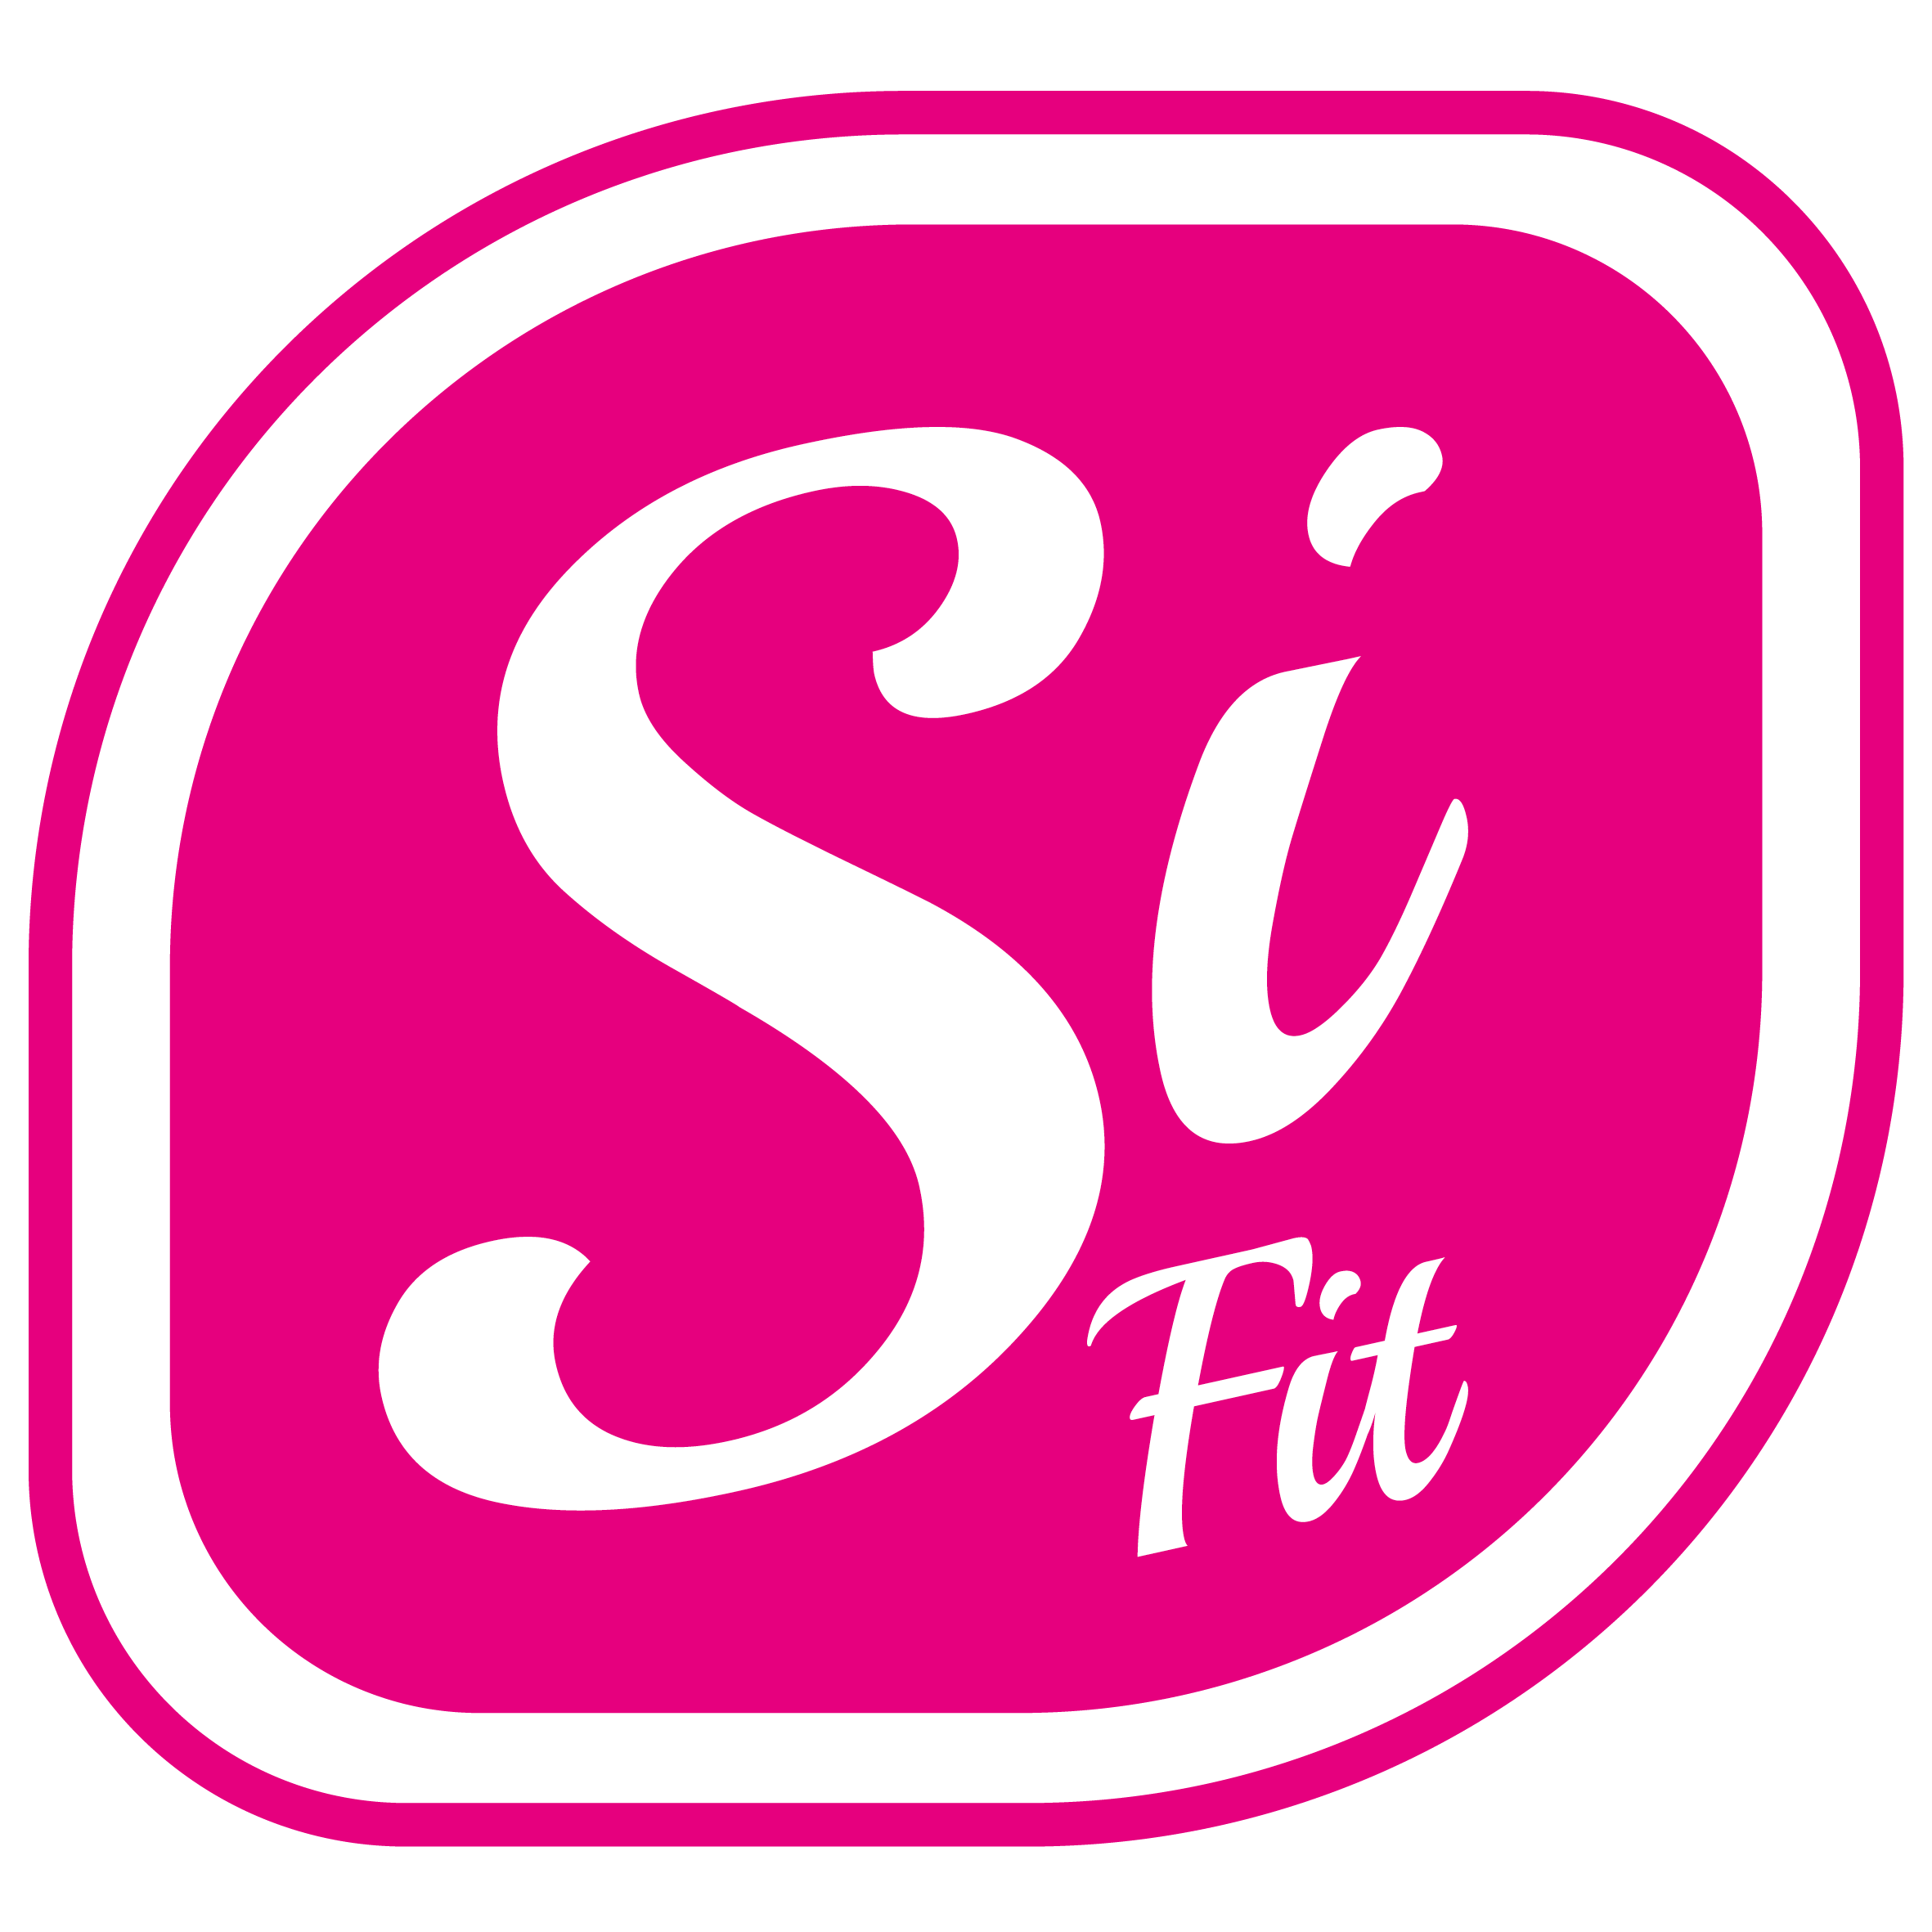 Si-Fit - Mitglied in Freudenberg WIRKT e.V.